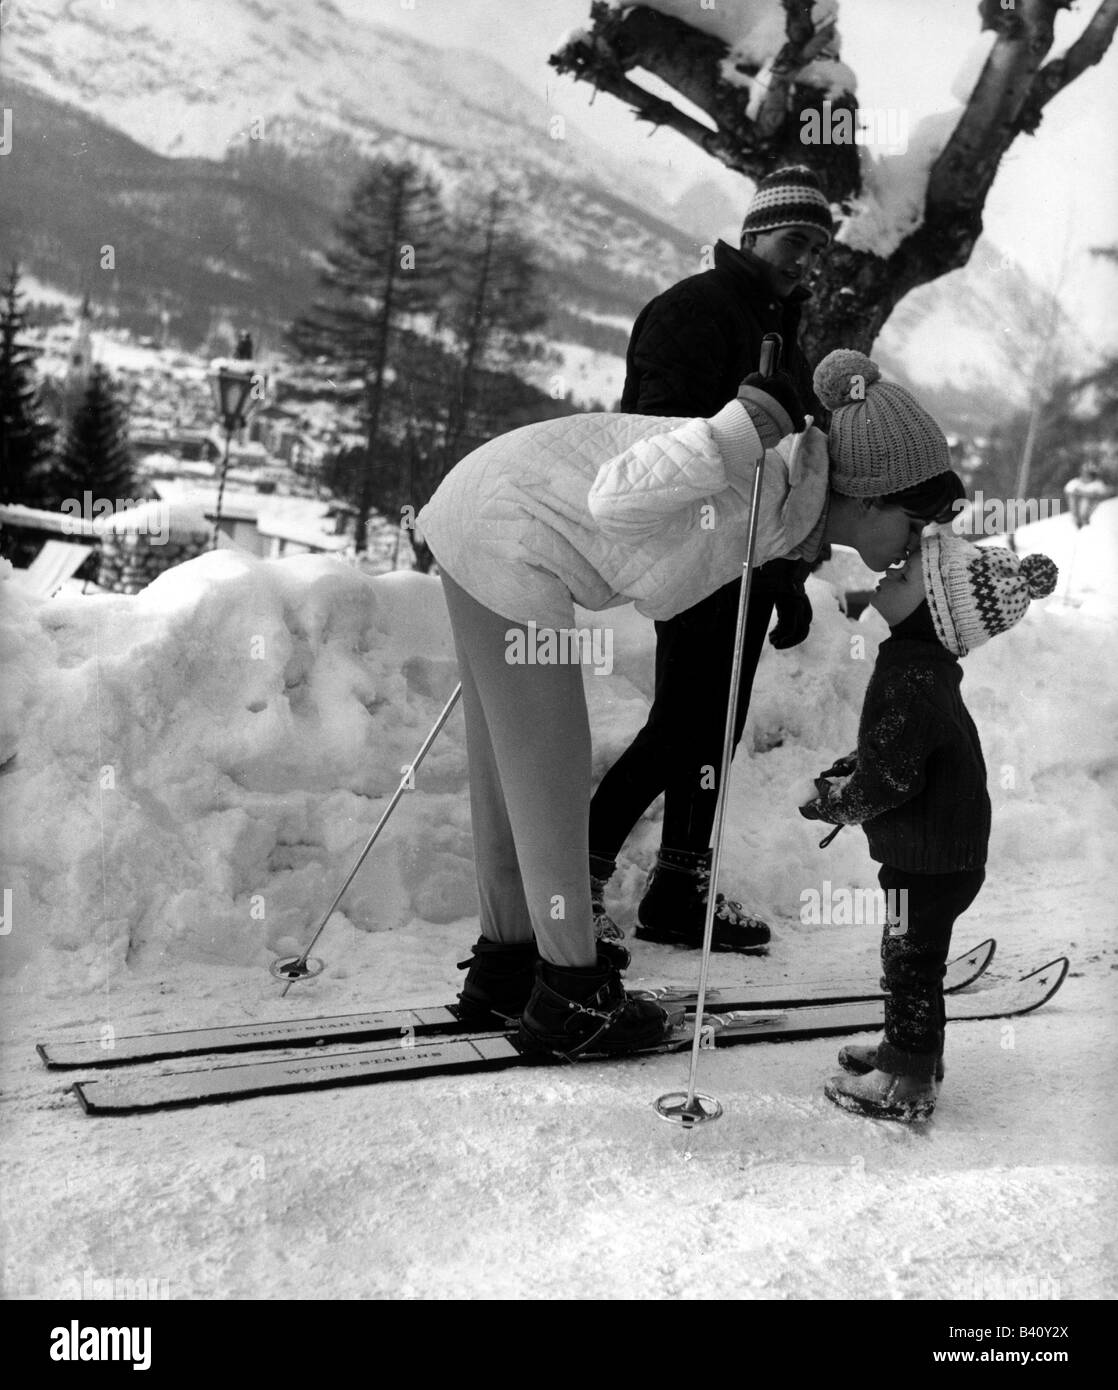 Cardinale, Claudia, * 15.4.1938, Italian actress, full length, on skier ...